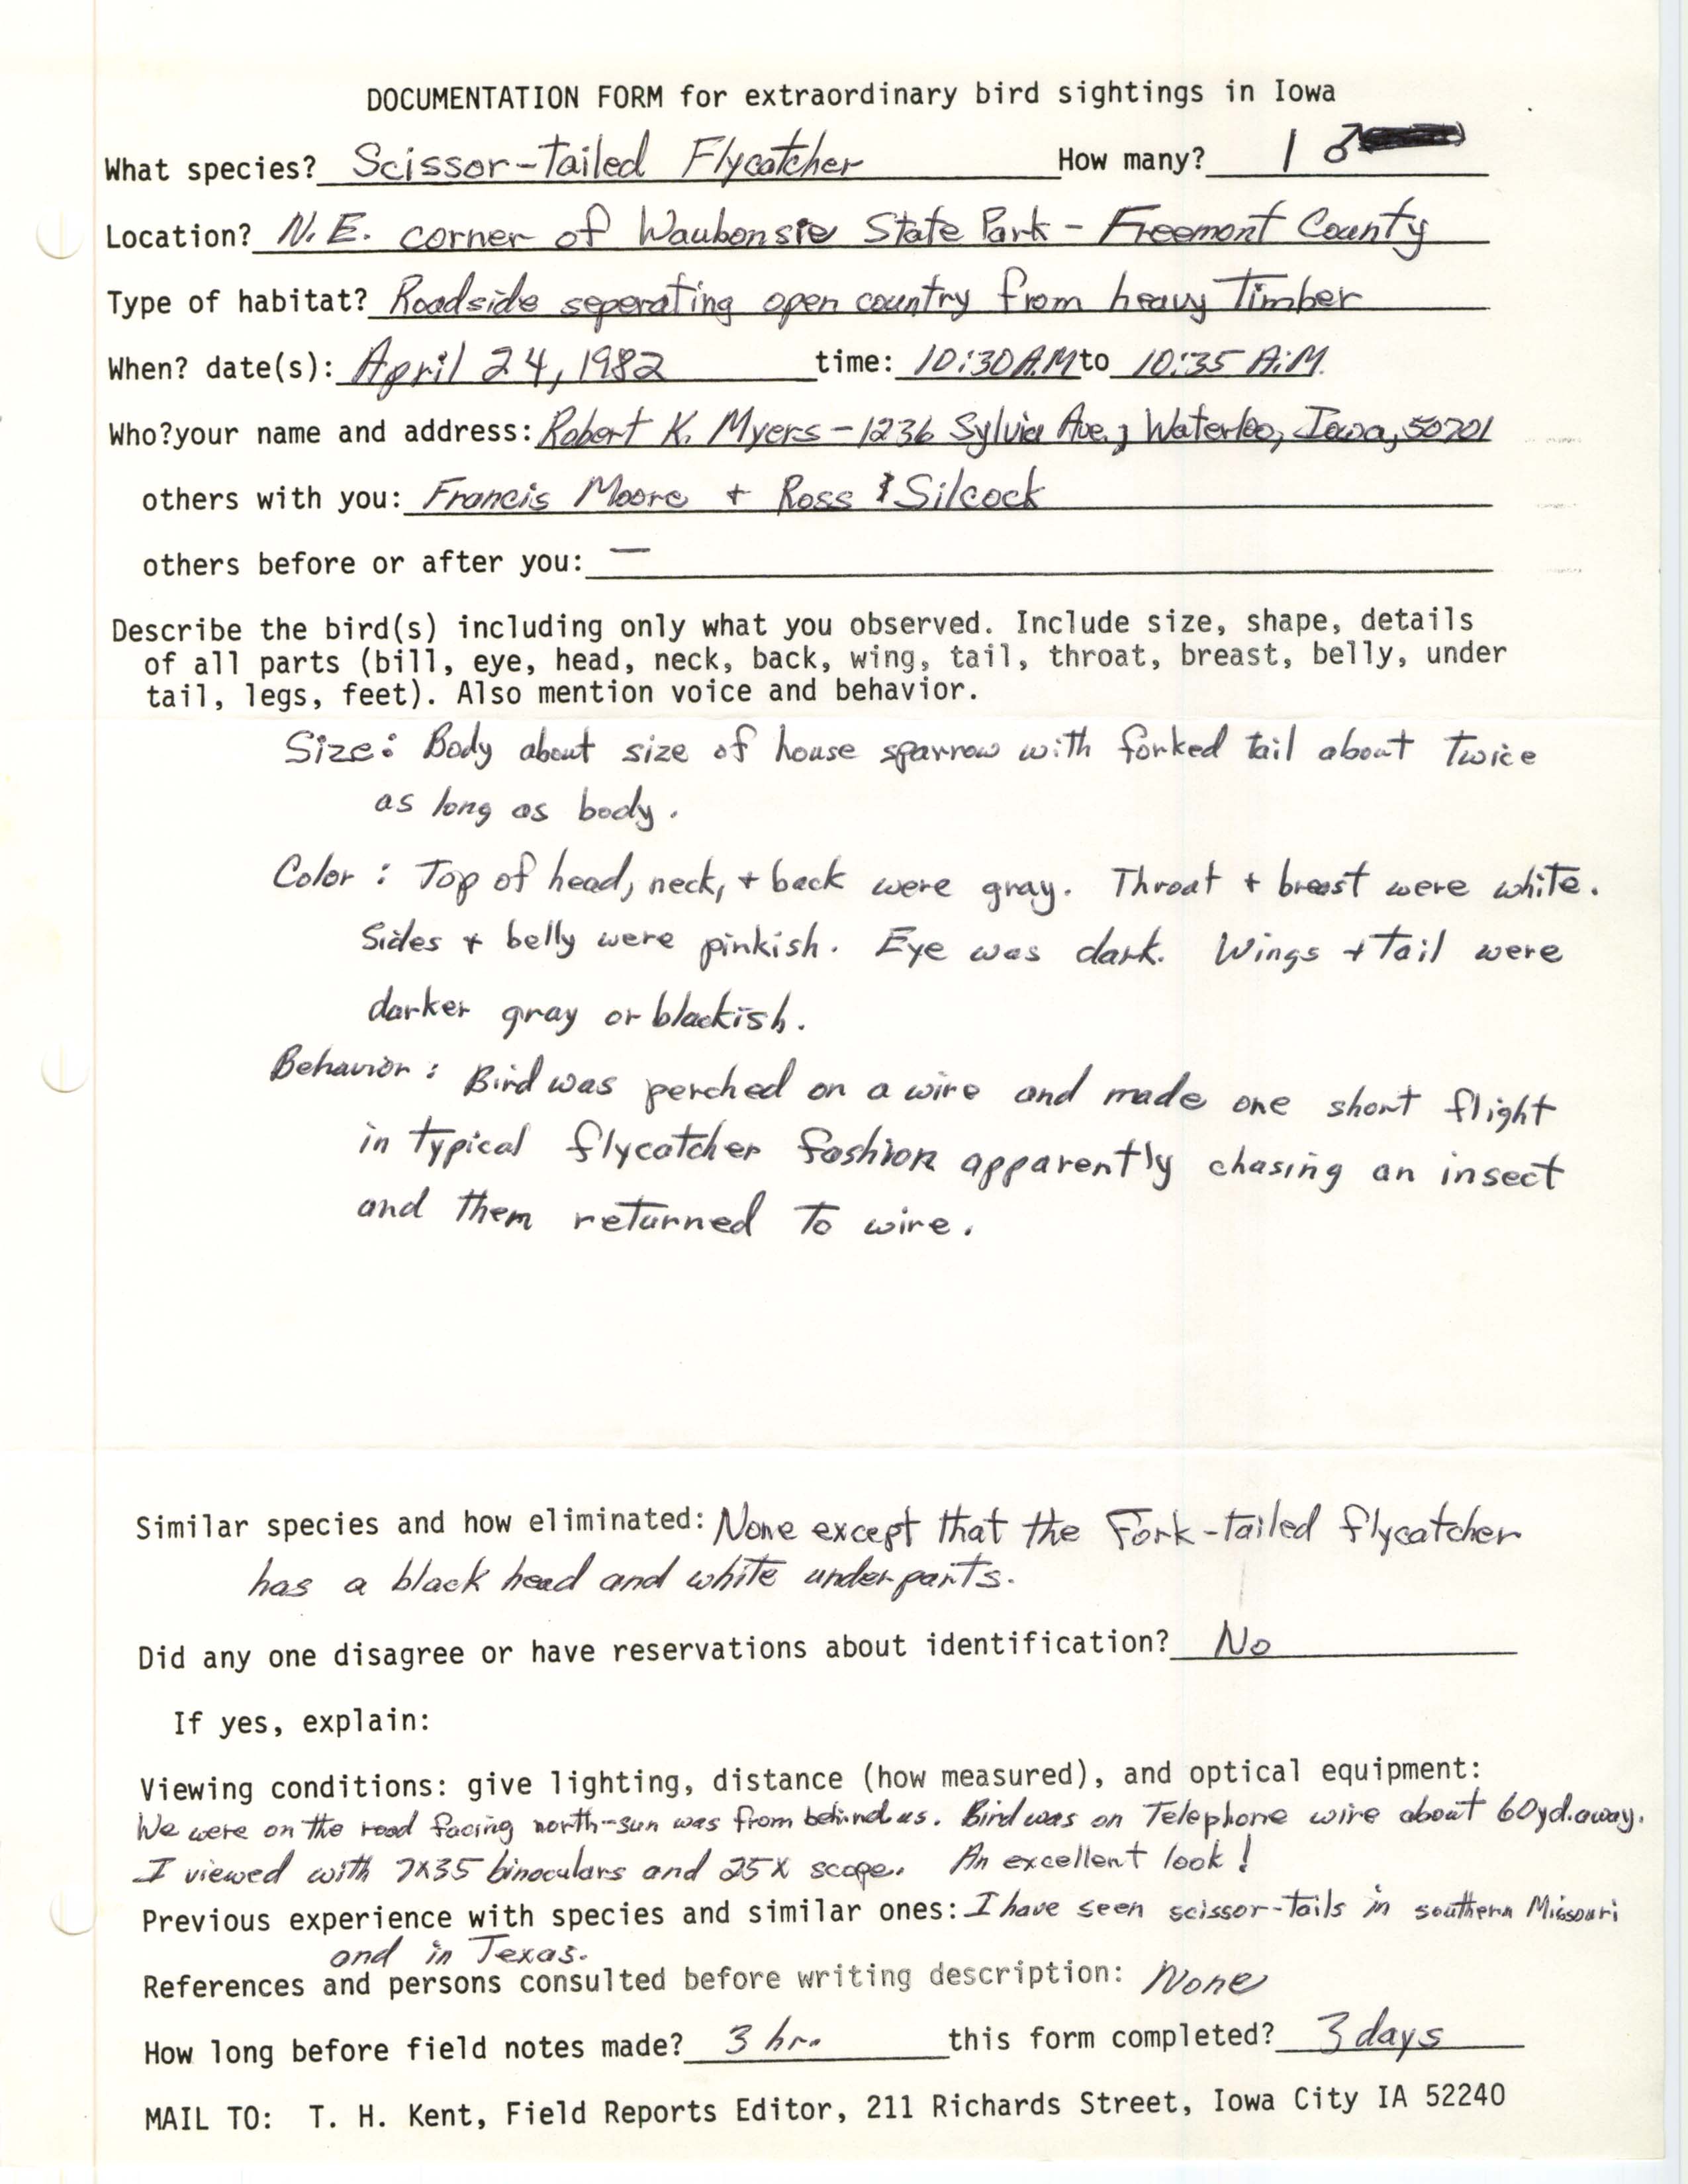 Rare bird documentation form for Scissor-tailed Flycatcher at Waubonsie State Park in 1982